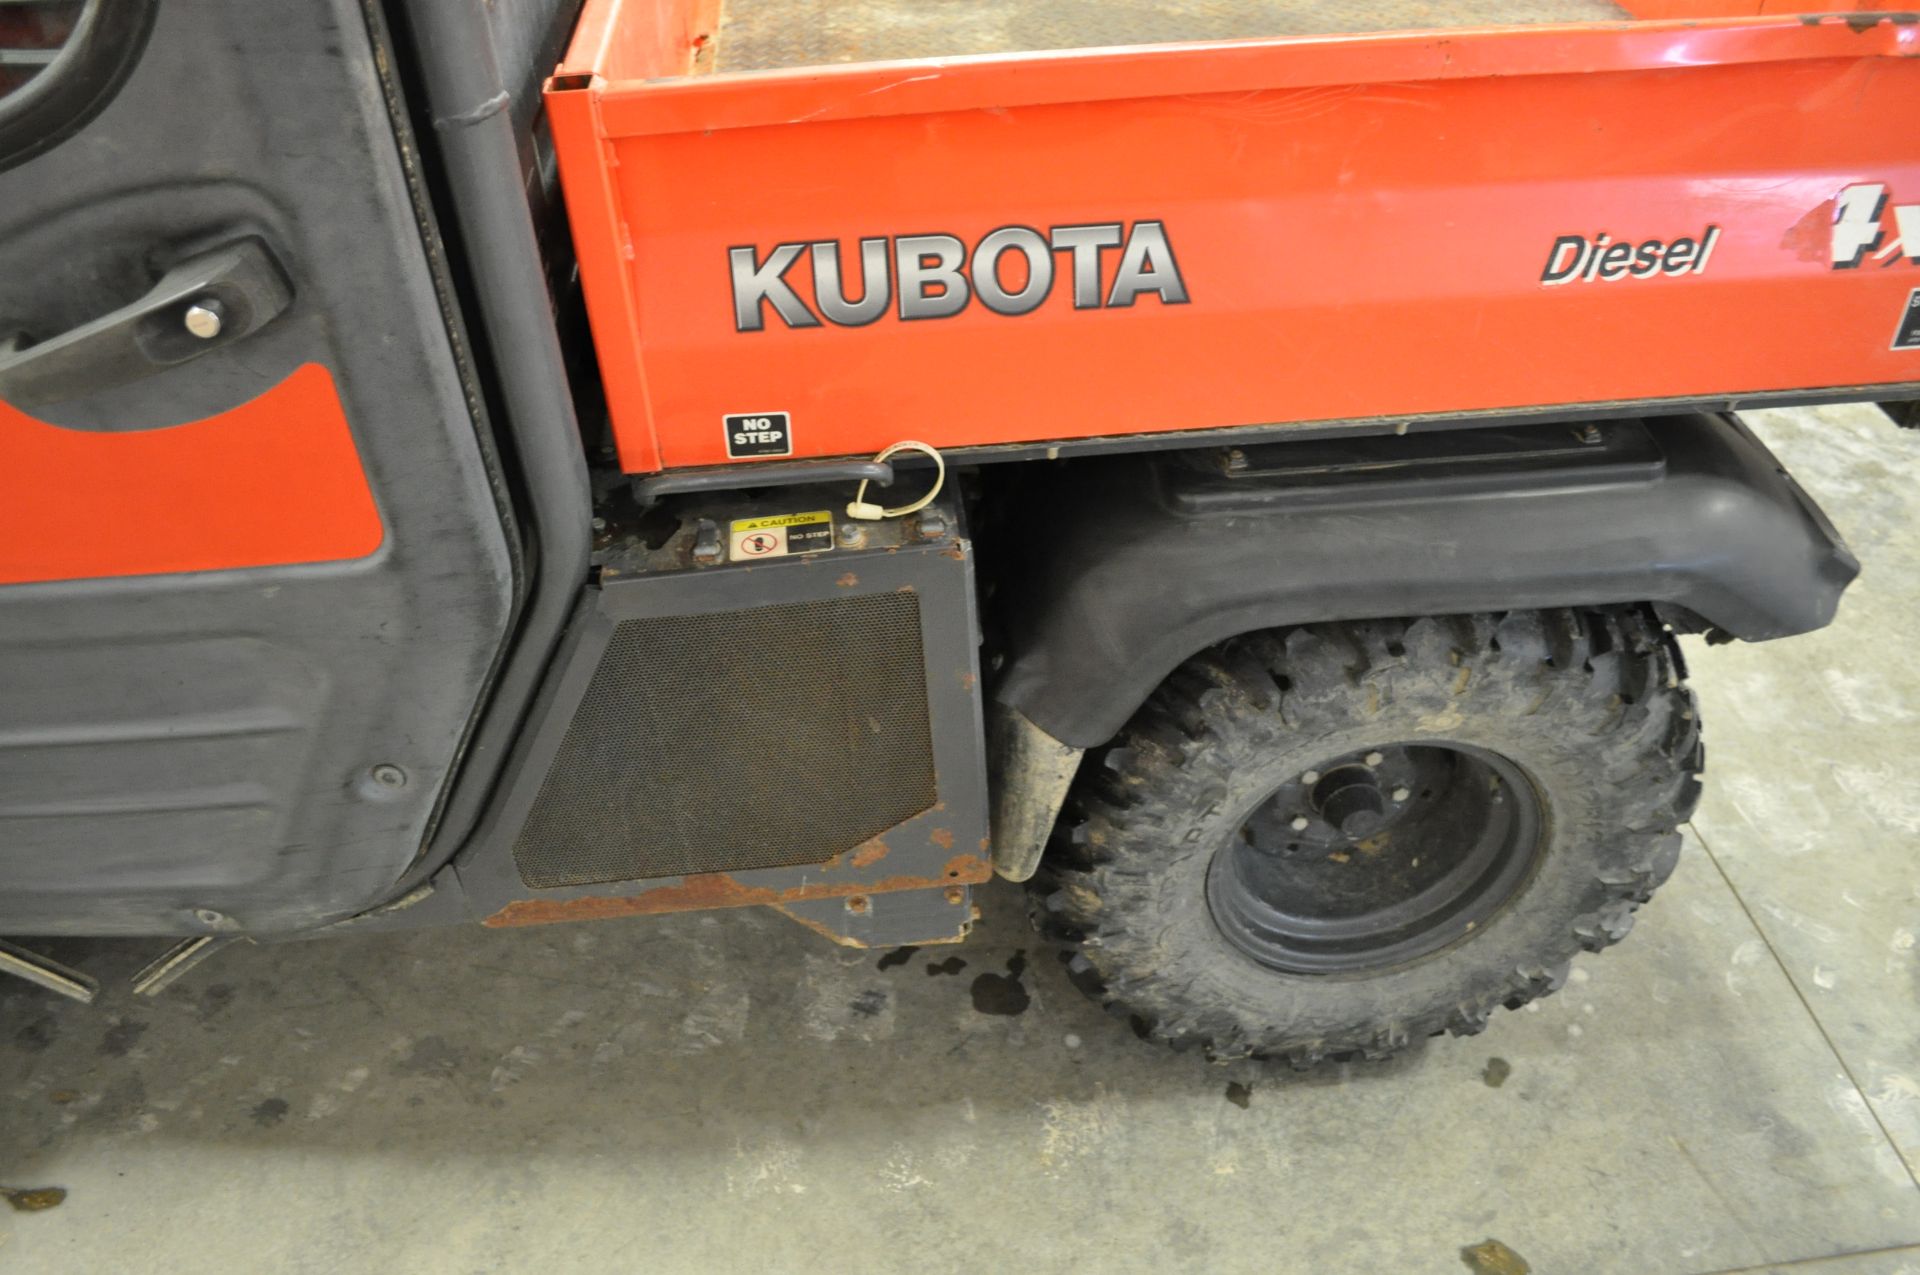 Kubota RTV 1100, 26x12 R 12 tires, C/H/A, radio, 4x4, hyd dump bed, 1070 hrs - Image 11 of 23